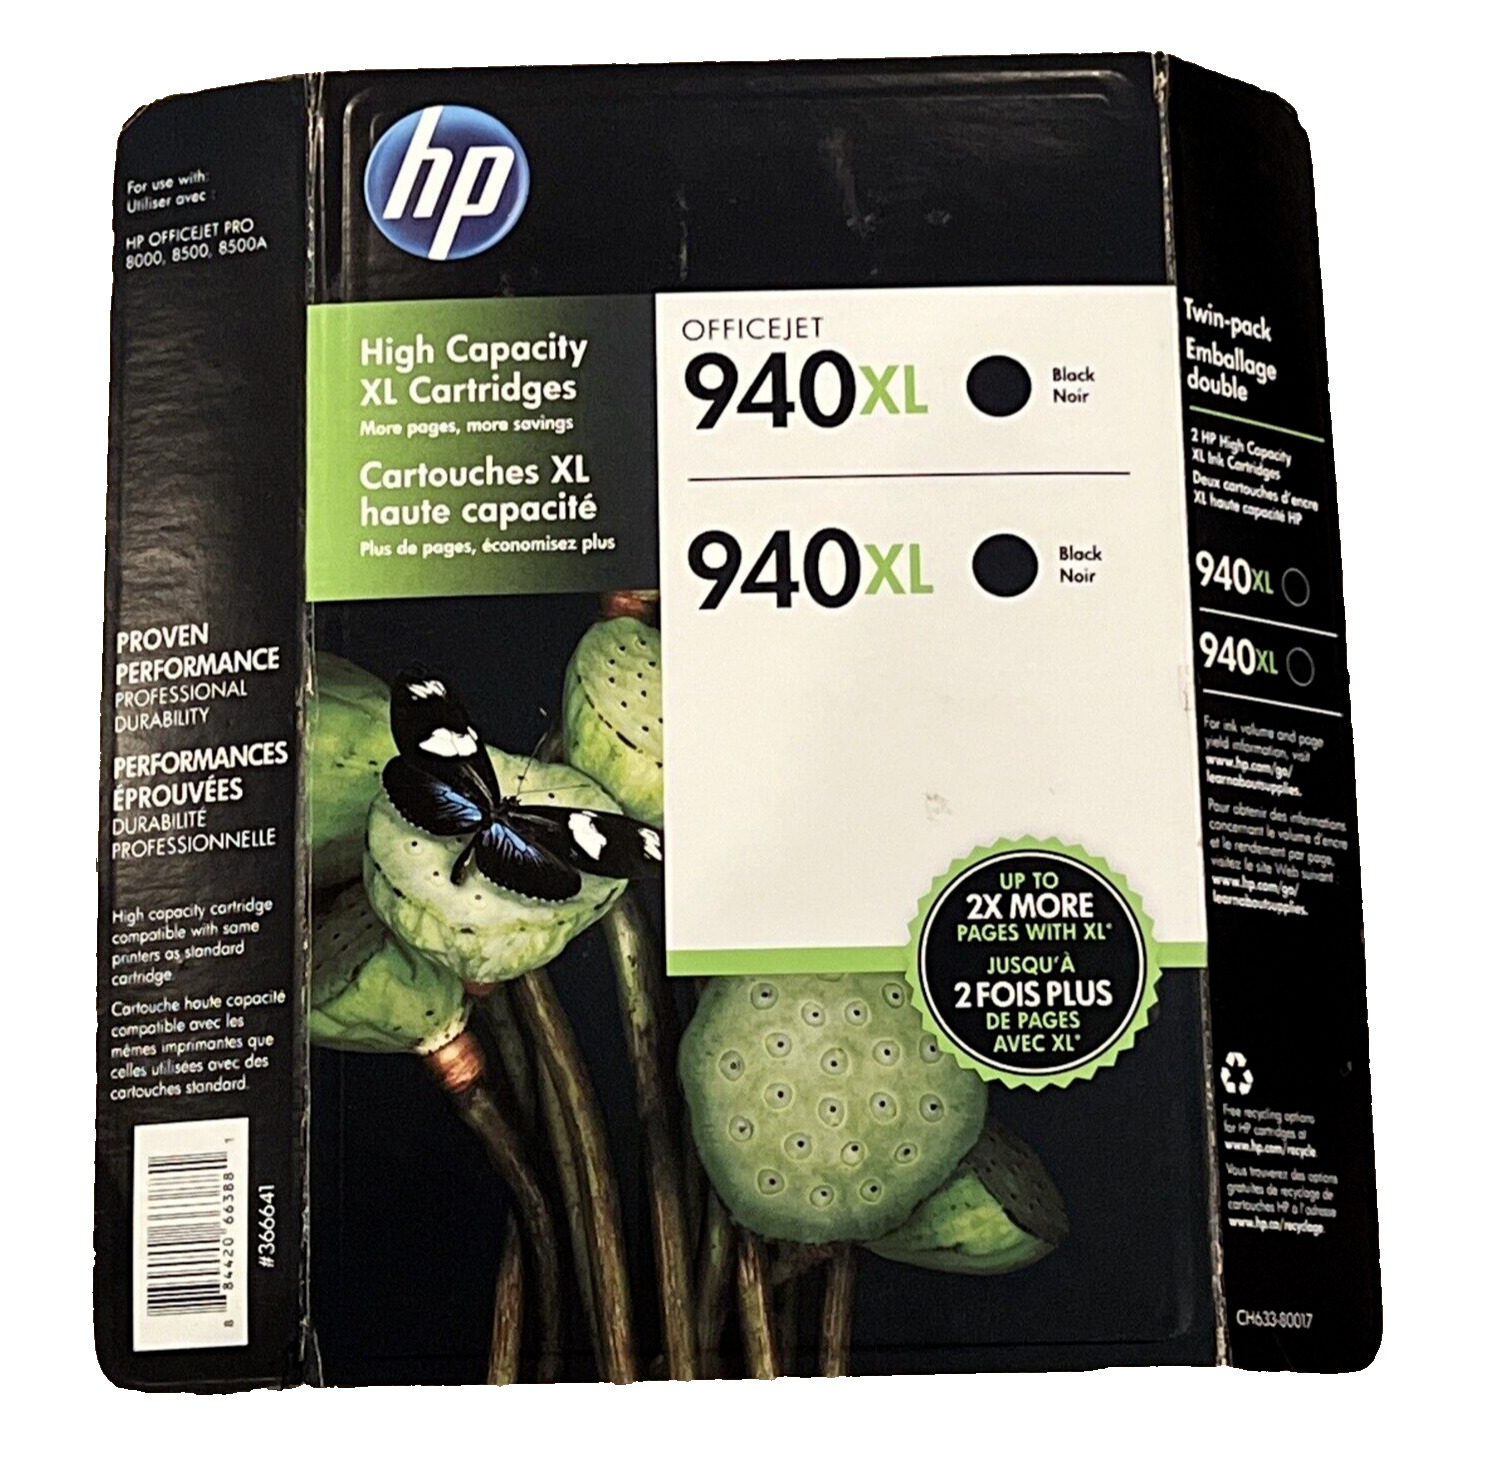 HP 940 XL Black Twin-Pack High Capacity Ink Cartridges (Exp 4/2018) NIB Genuine